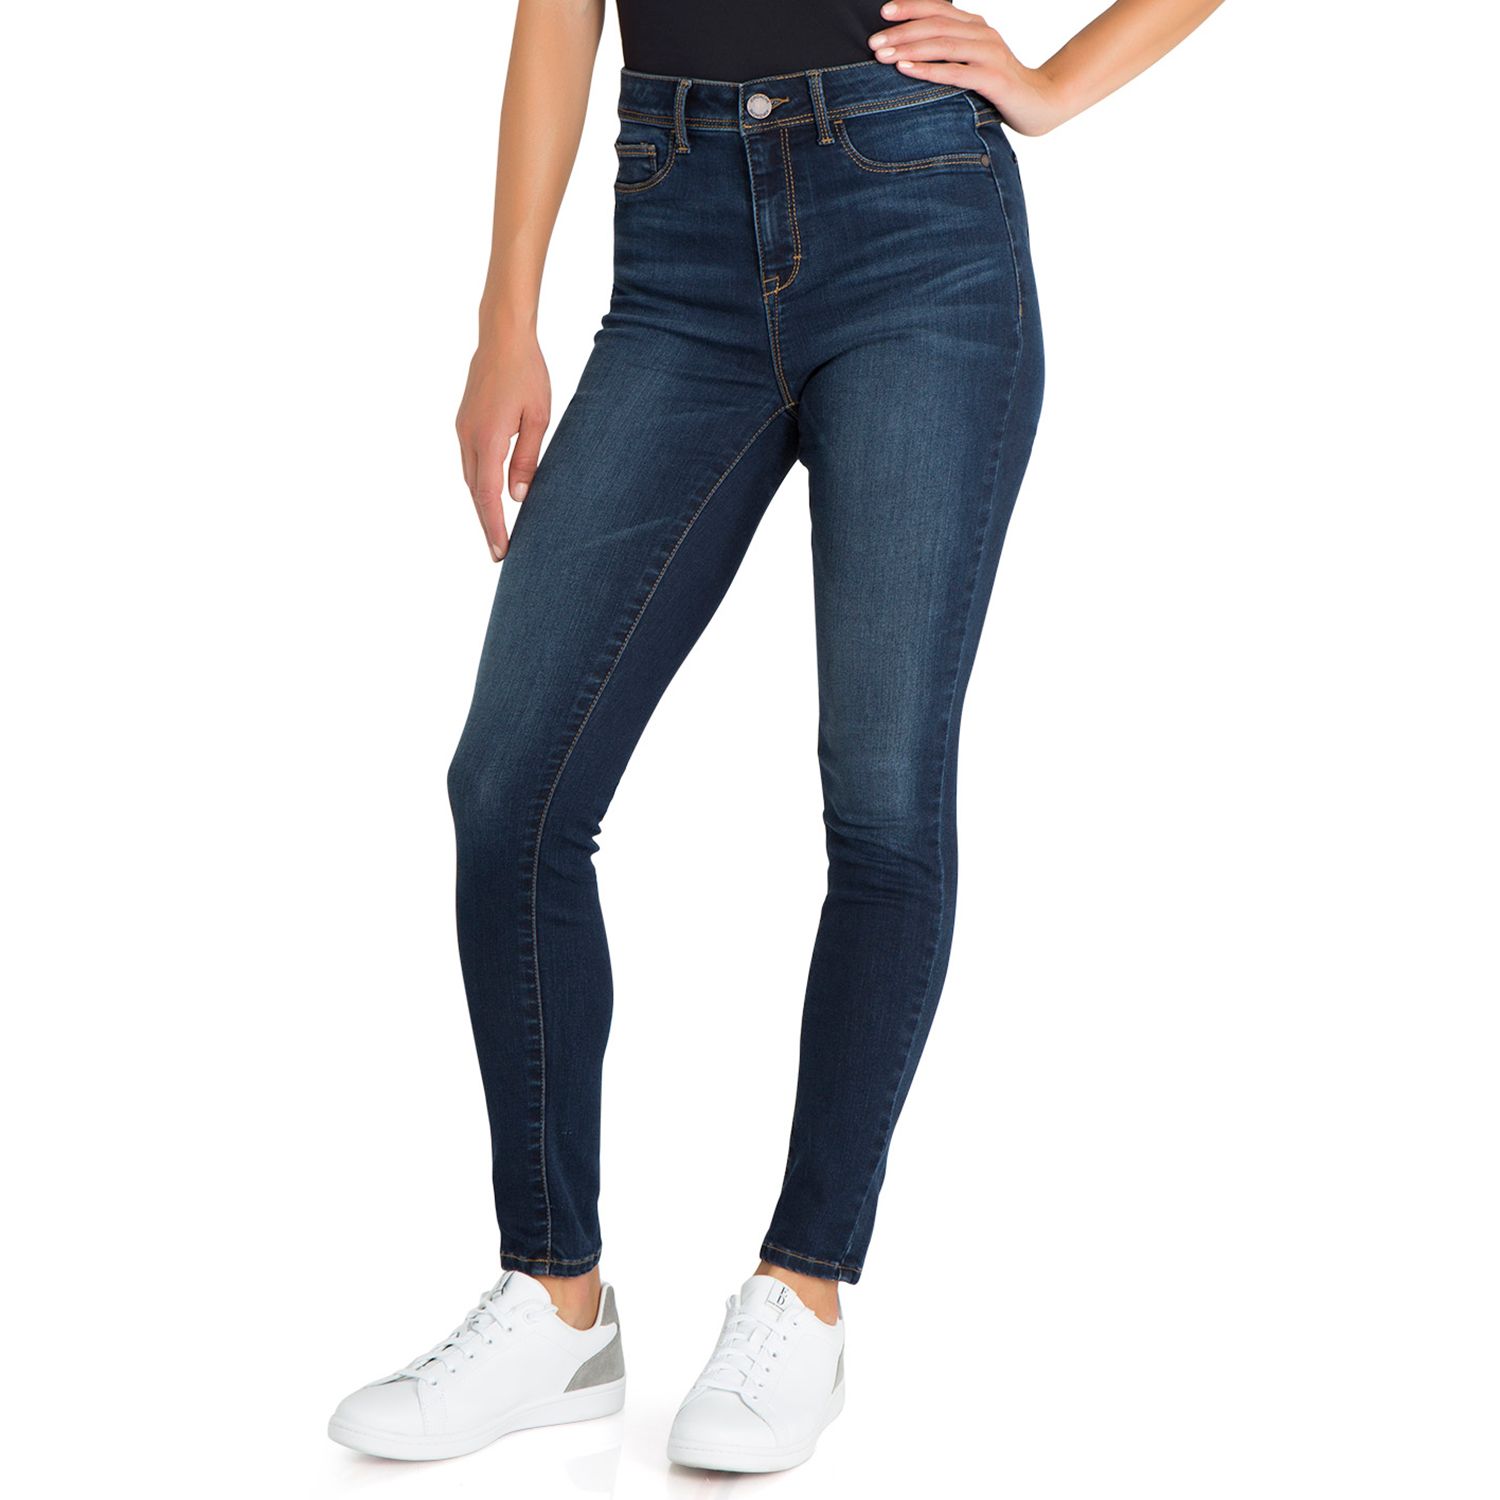 Jordache Super High-Waist Skinny Jeans